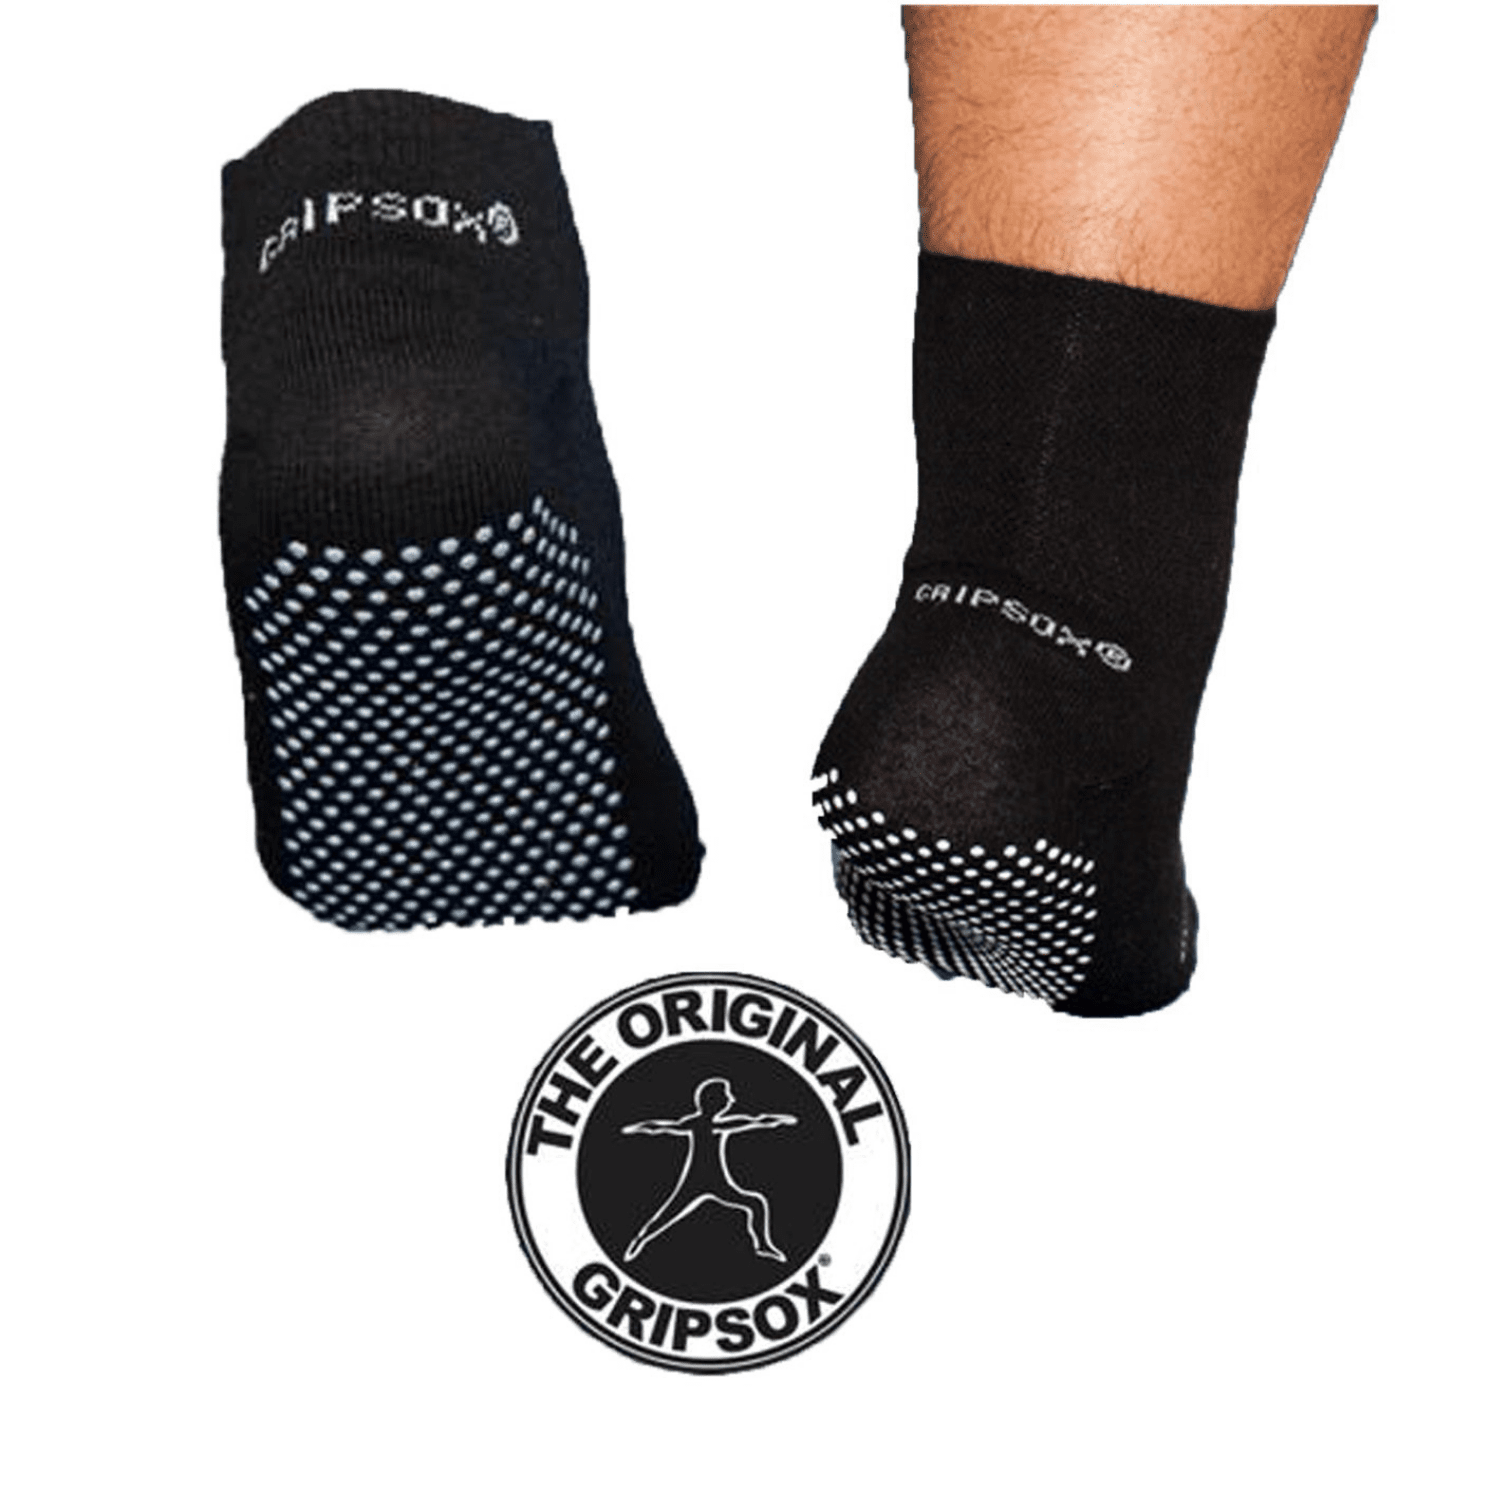 Pilates Socks Professional Non-Slip Socks Medium Tube Yoga Socks